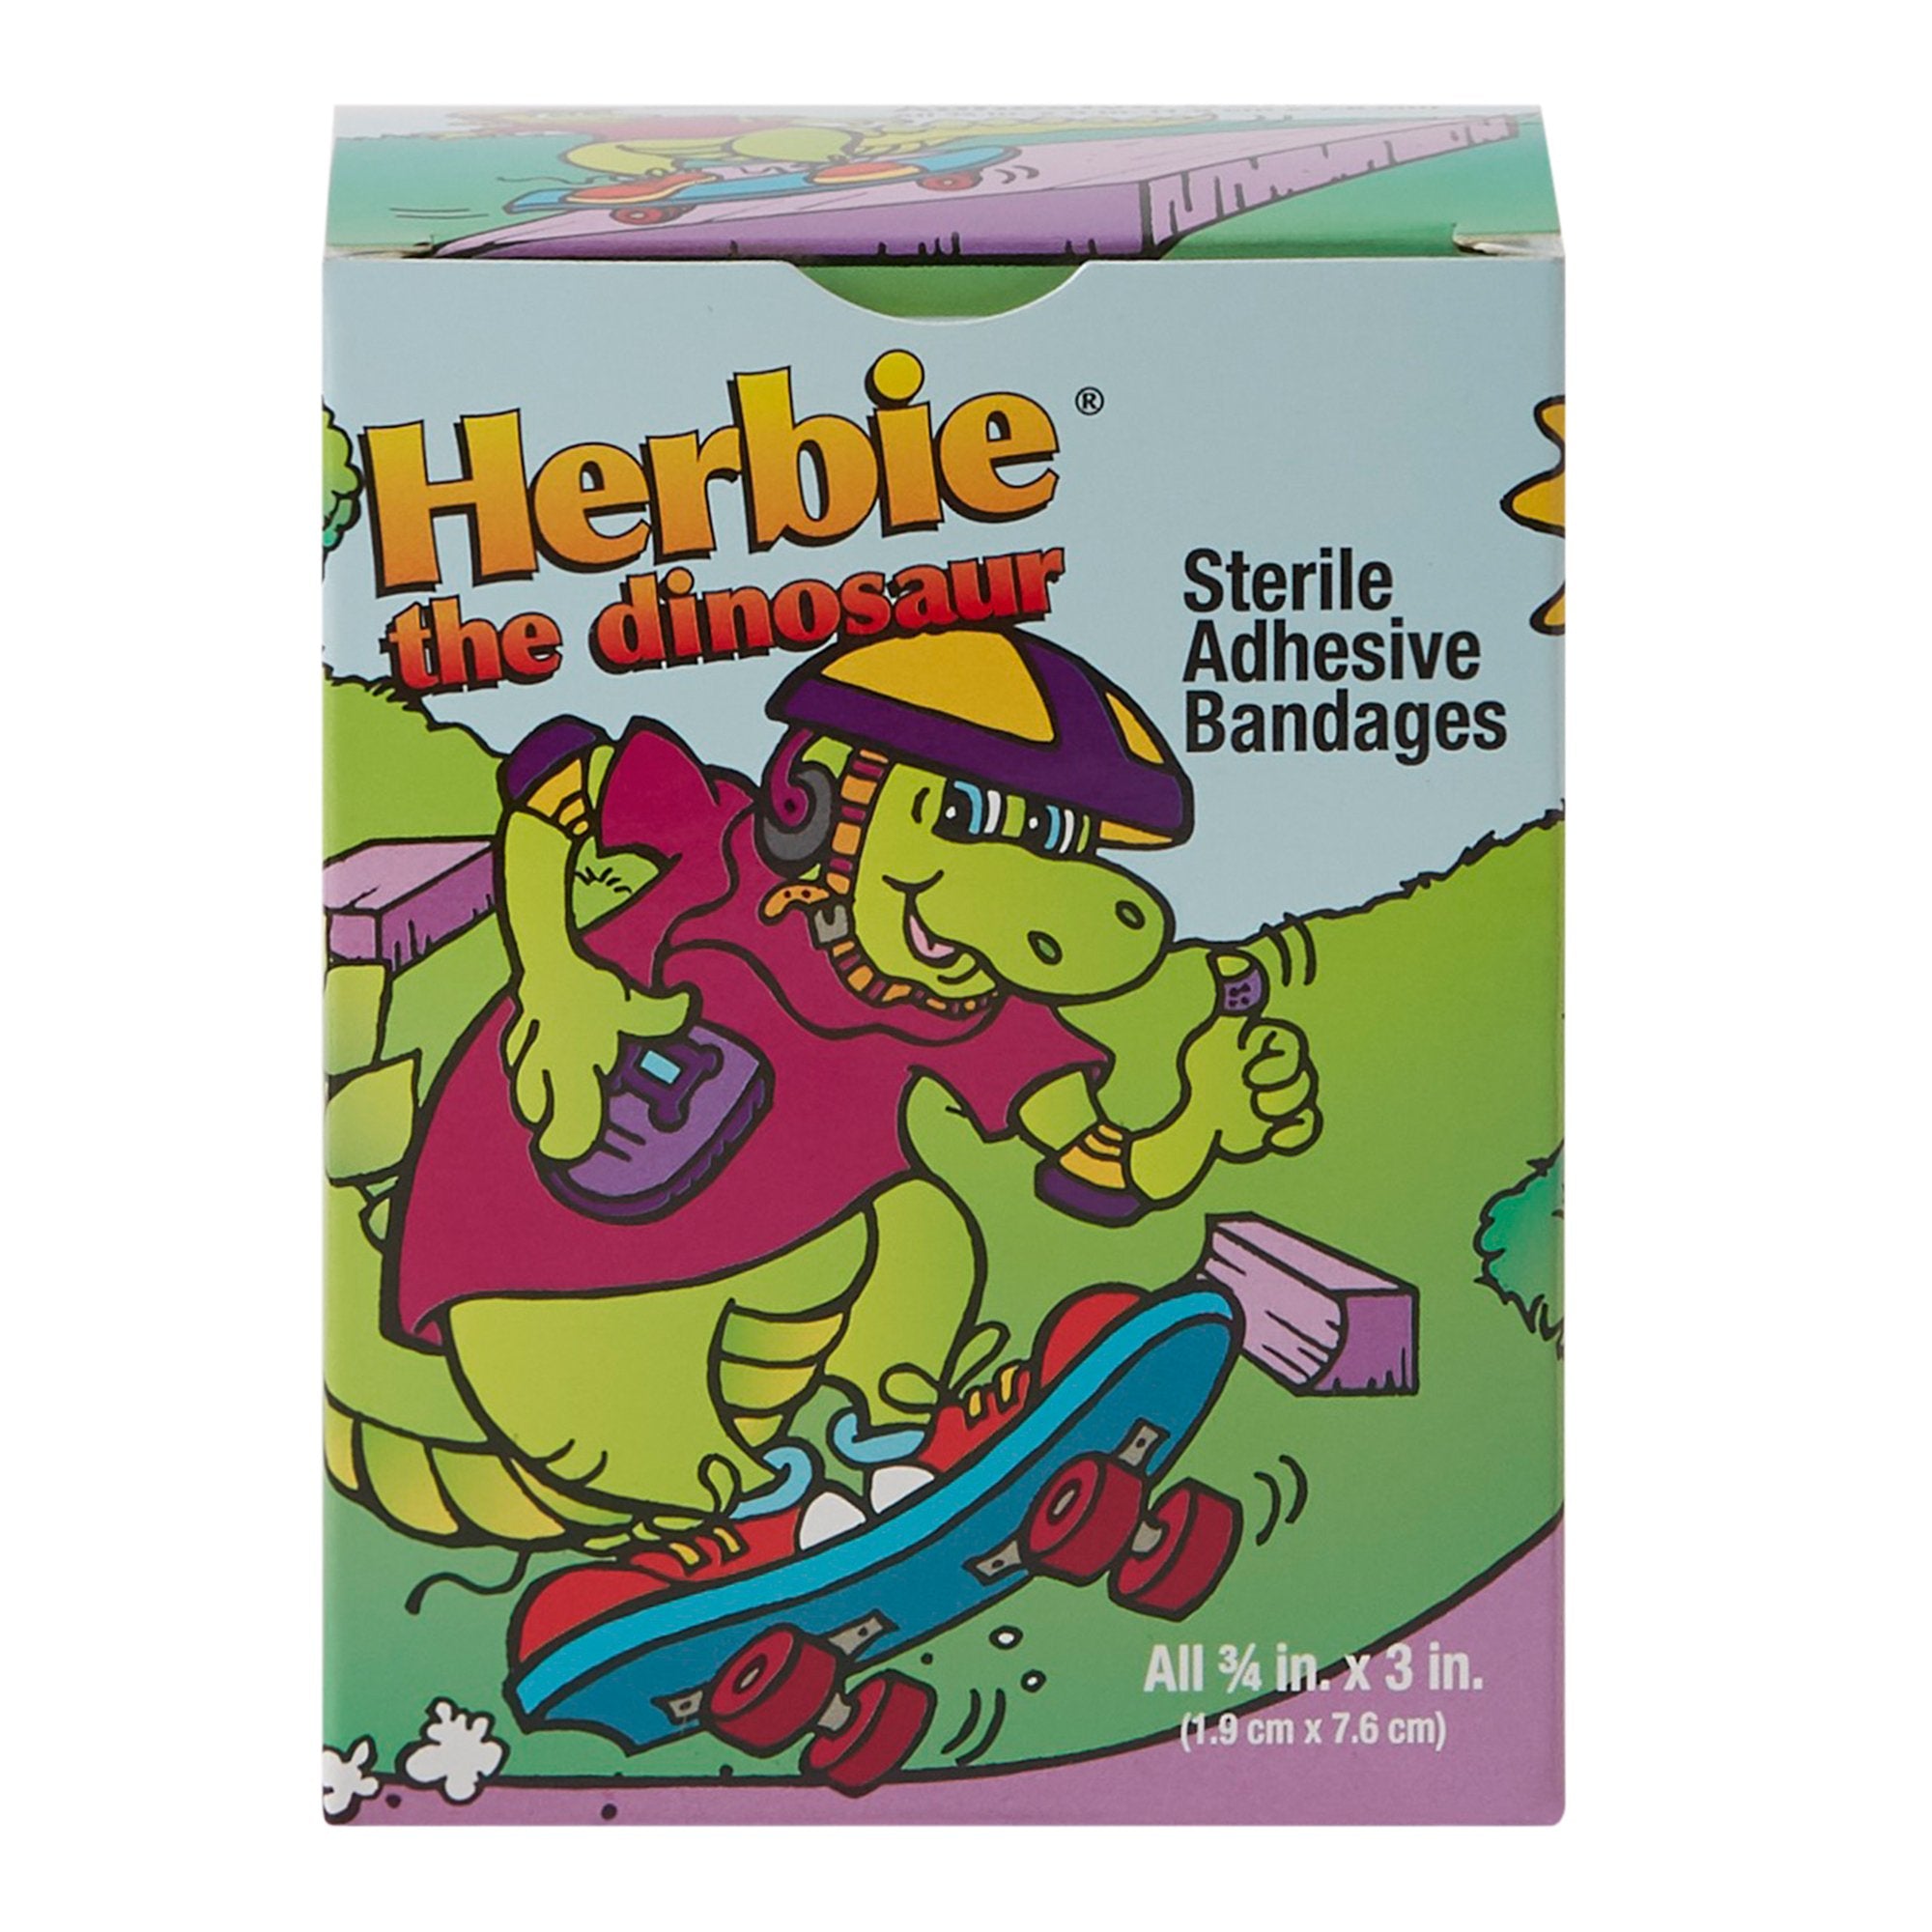 Adhesive Strip American® White Cross Stat Strip® 3/4 X 3 Inch Plastic Rectangle Kid Design (Herbie the Dinosaur) Sterile